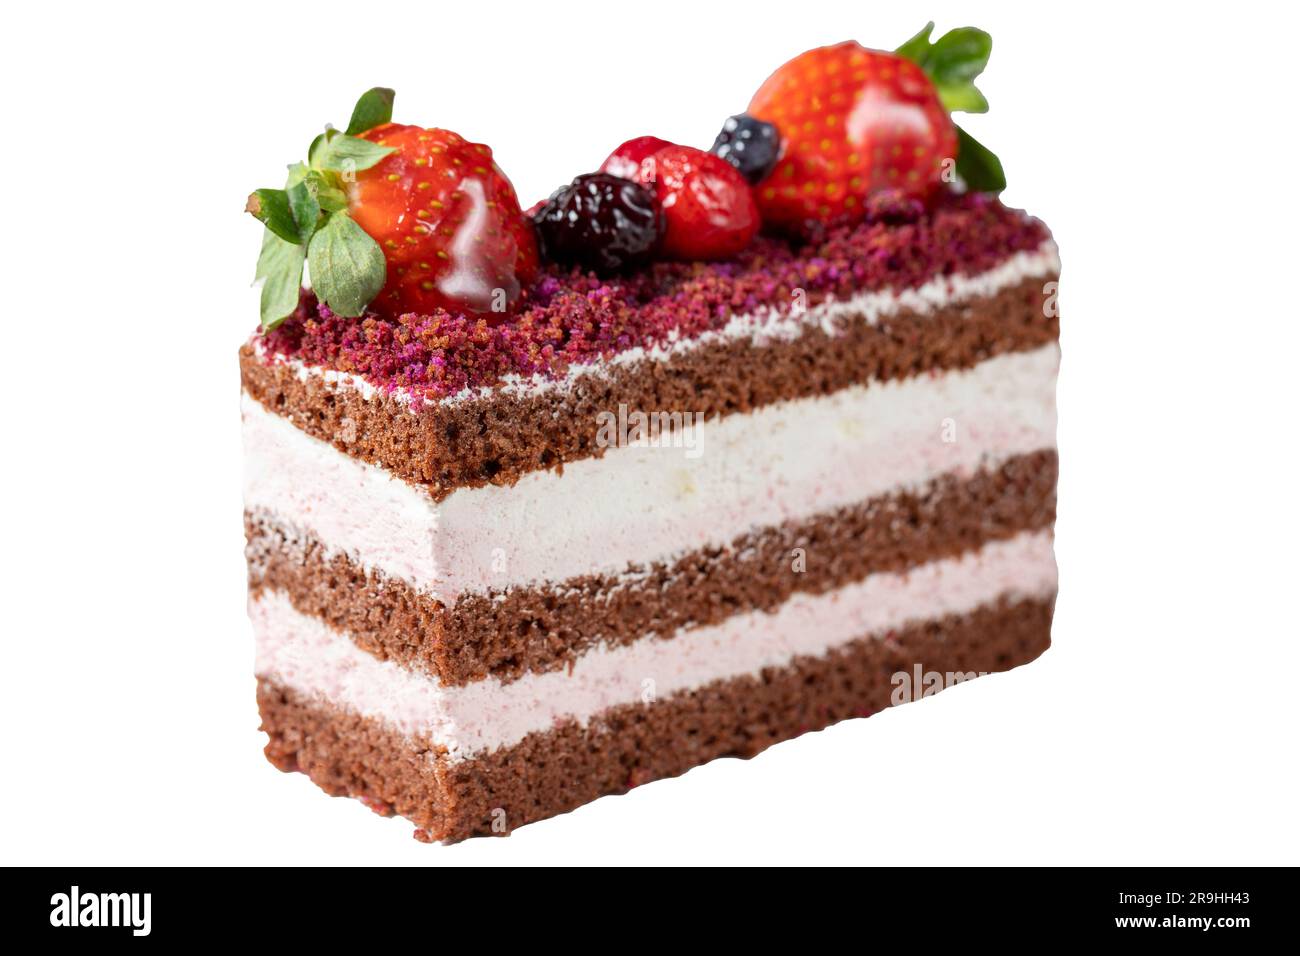 Fruit and whipped cream cake isolated on white background. close up Stock Photo